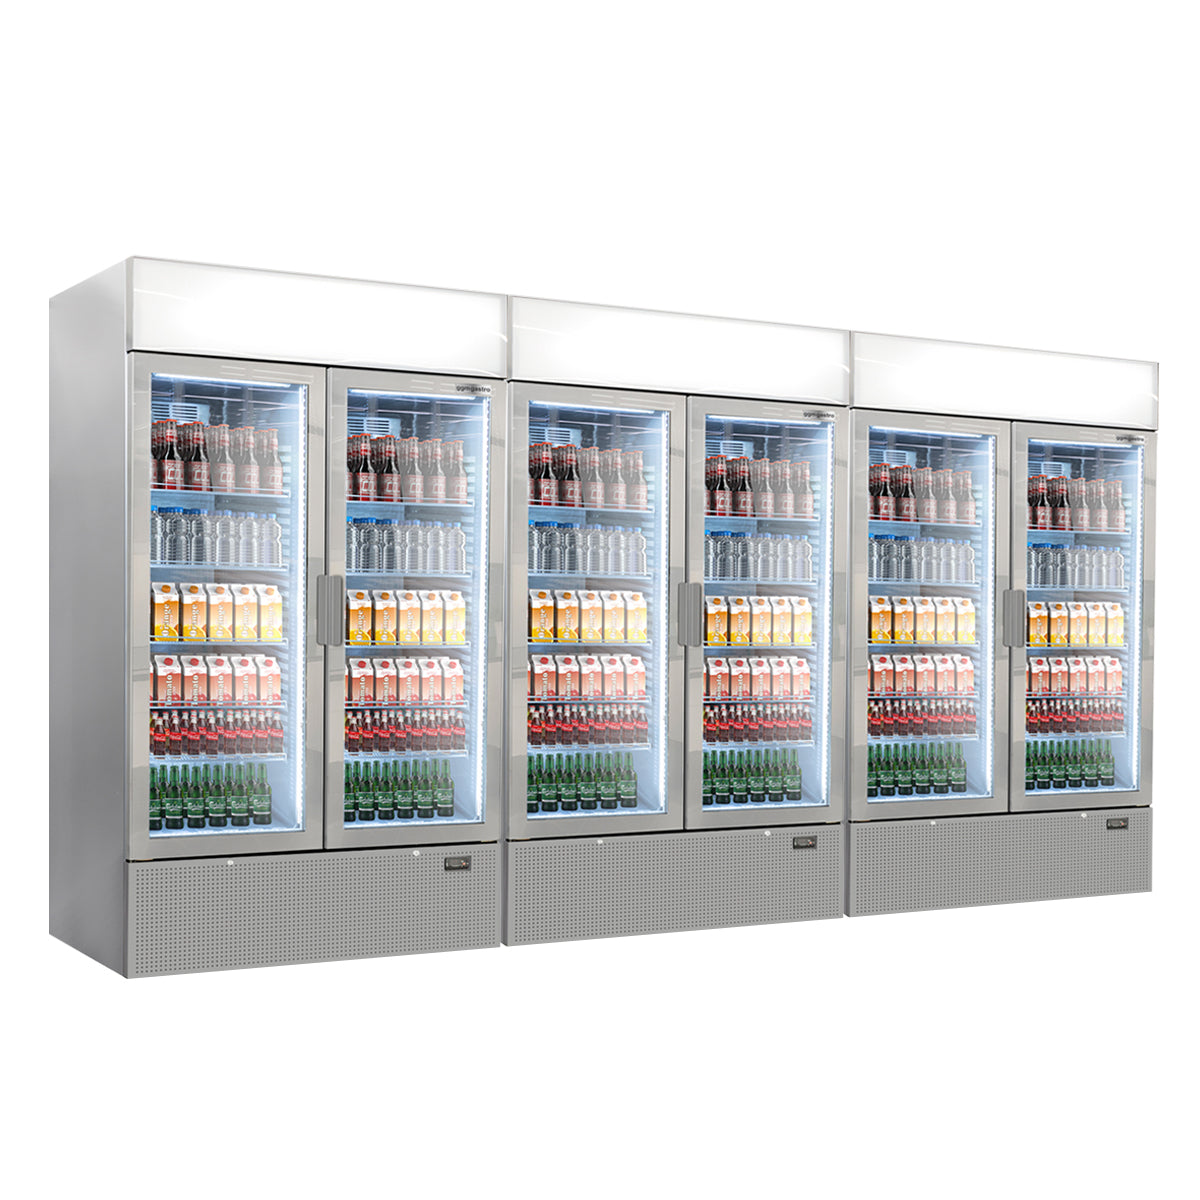 (3 броя) Хладилник за напитки - 1048 литра (нетен обем) - СИВ